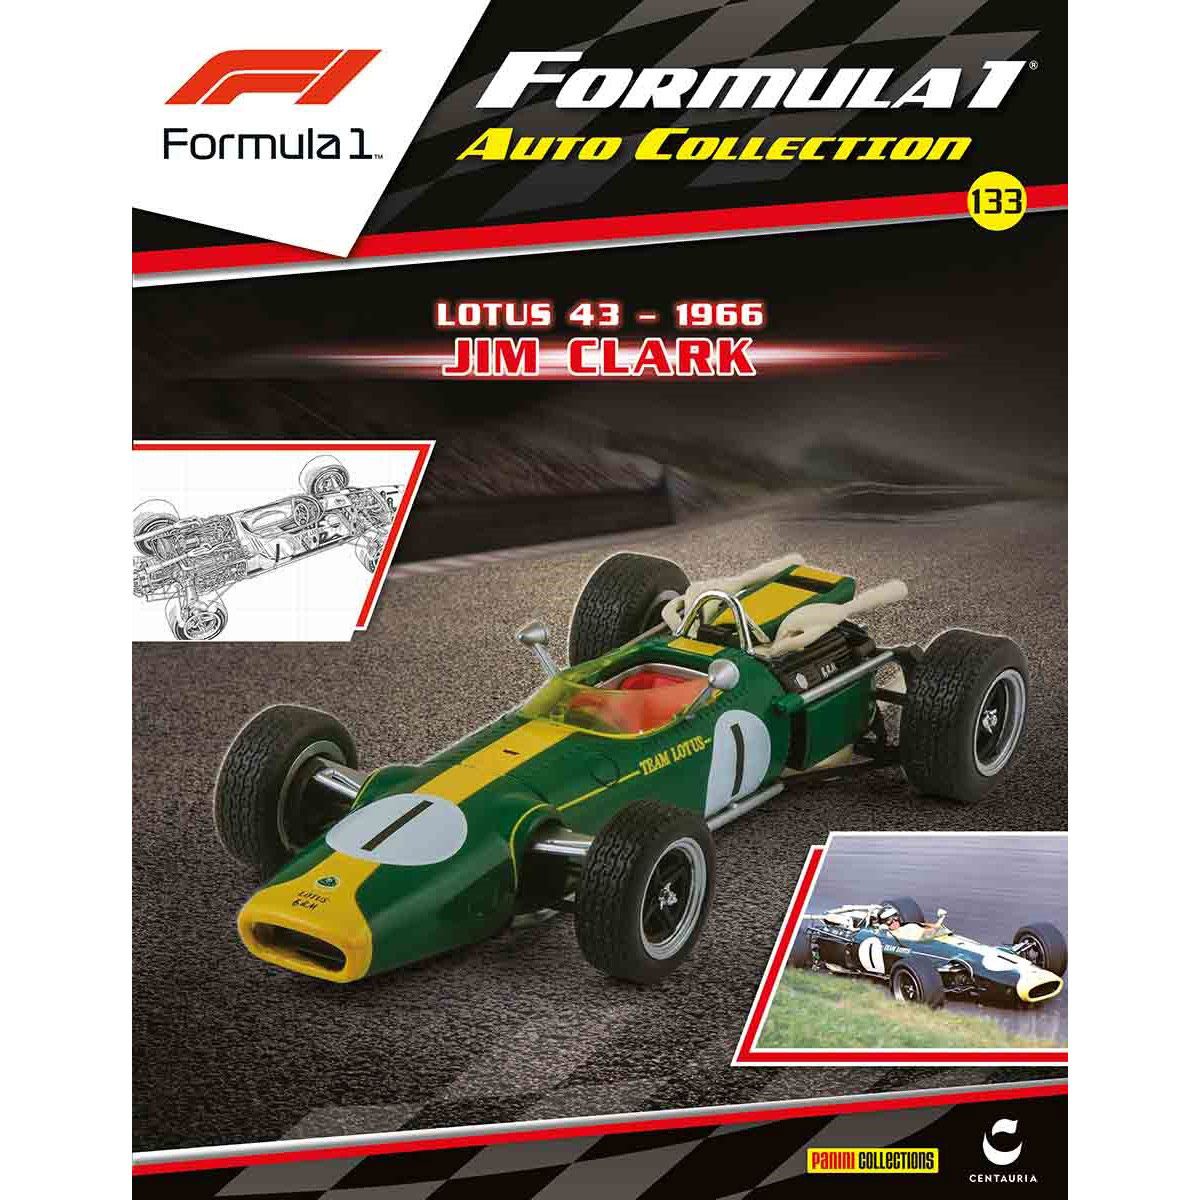 Formula 1 Partwork N.133